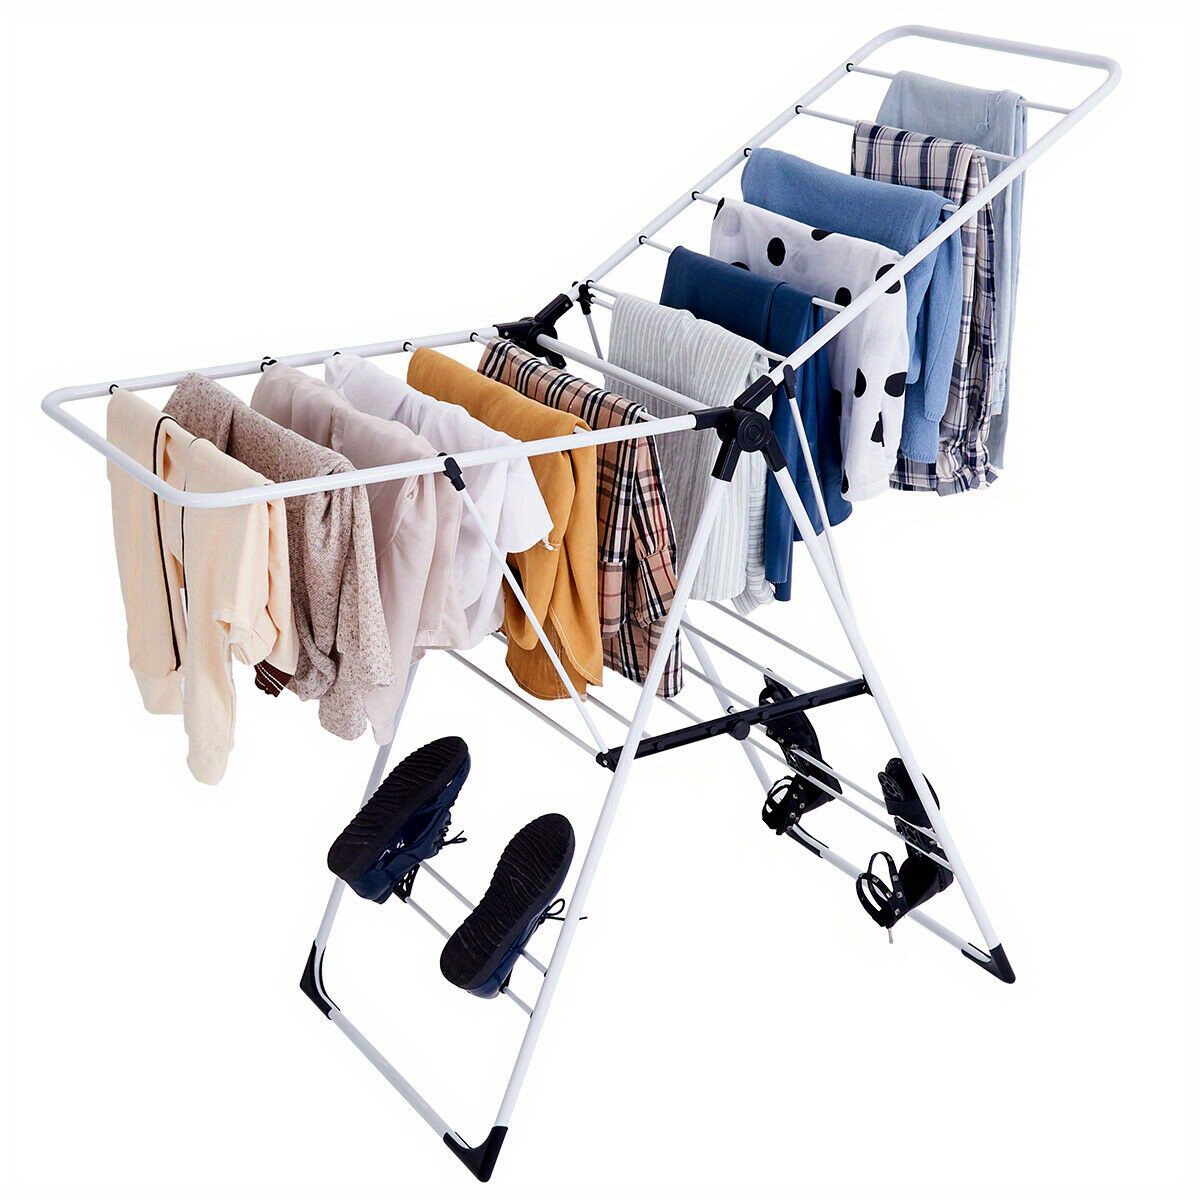 

Multigot Laundry Clothes Storage Drying Rack Portable Folding Dryer Hanger Heavy Duty New